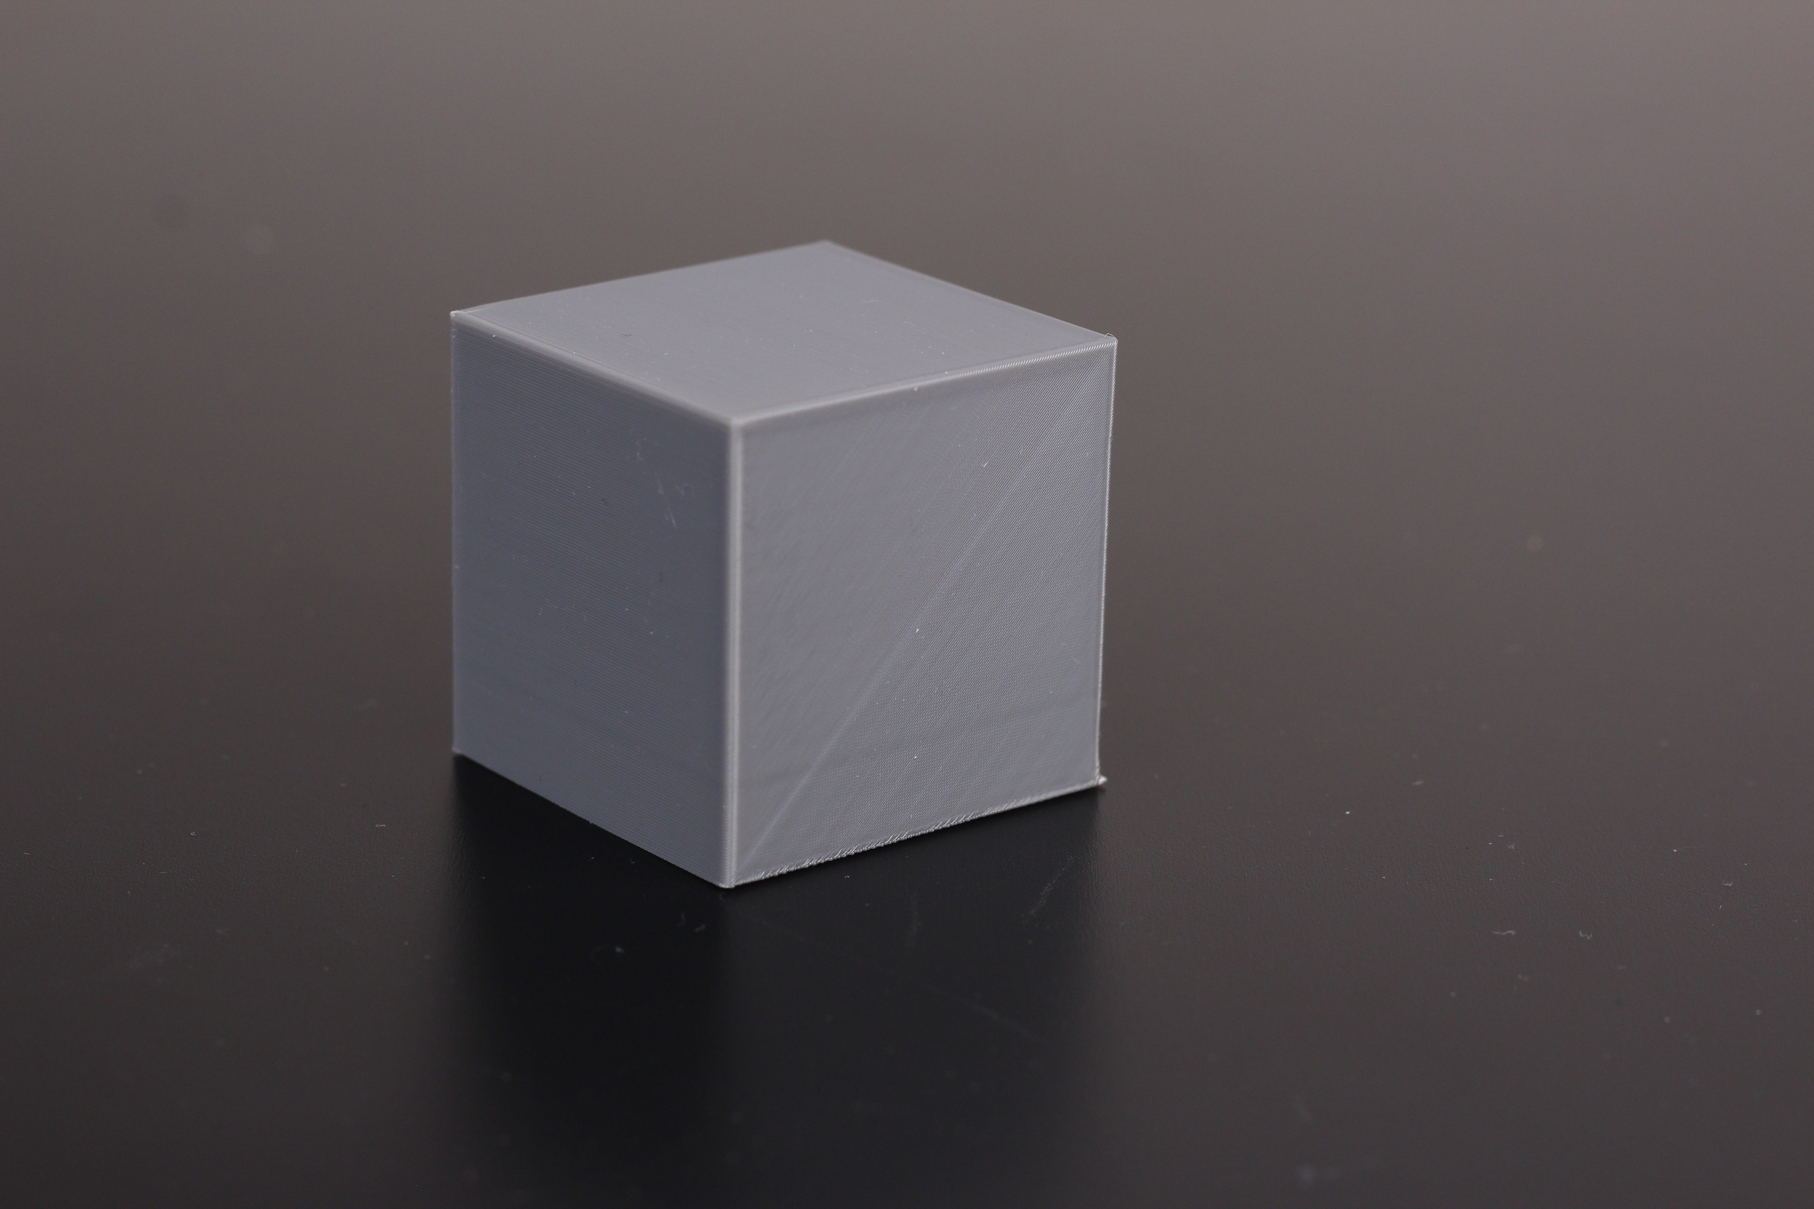 40x40 cube 4 | Creality 3DPrintMill (CR-30) Review: Belt Printer for Batch 3D Printing